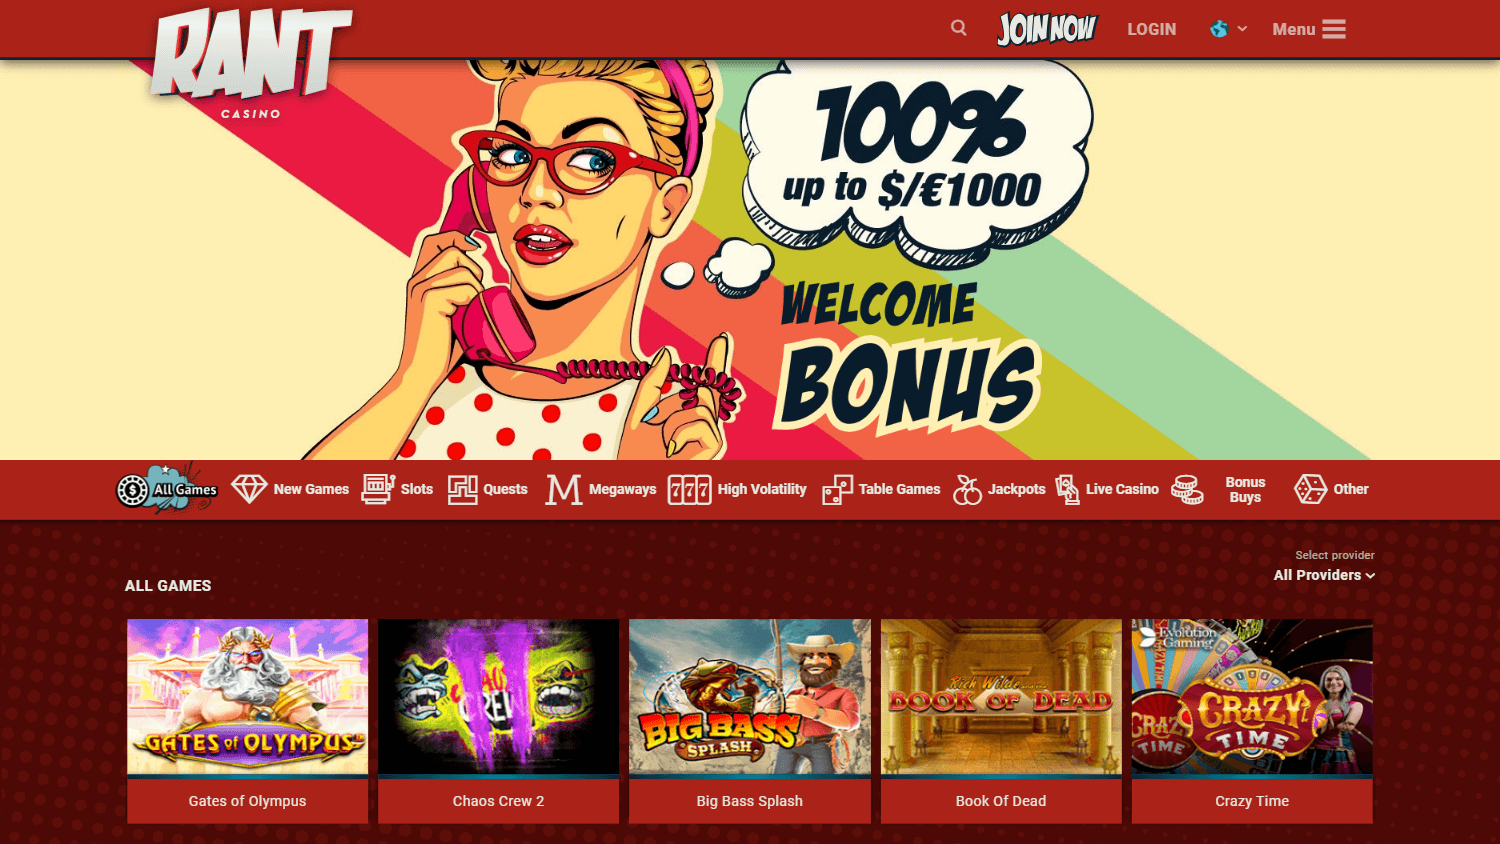 rant_casino_homepage_desktop